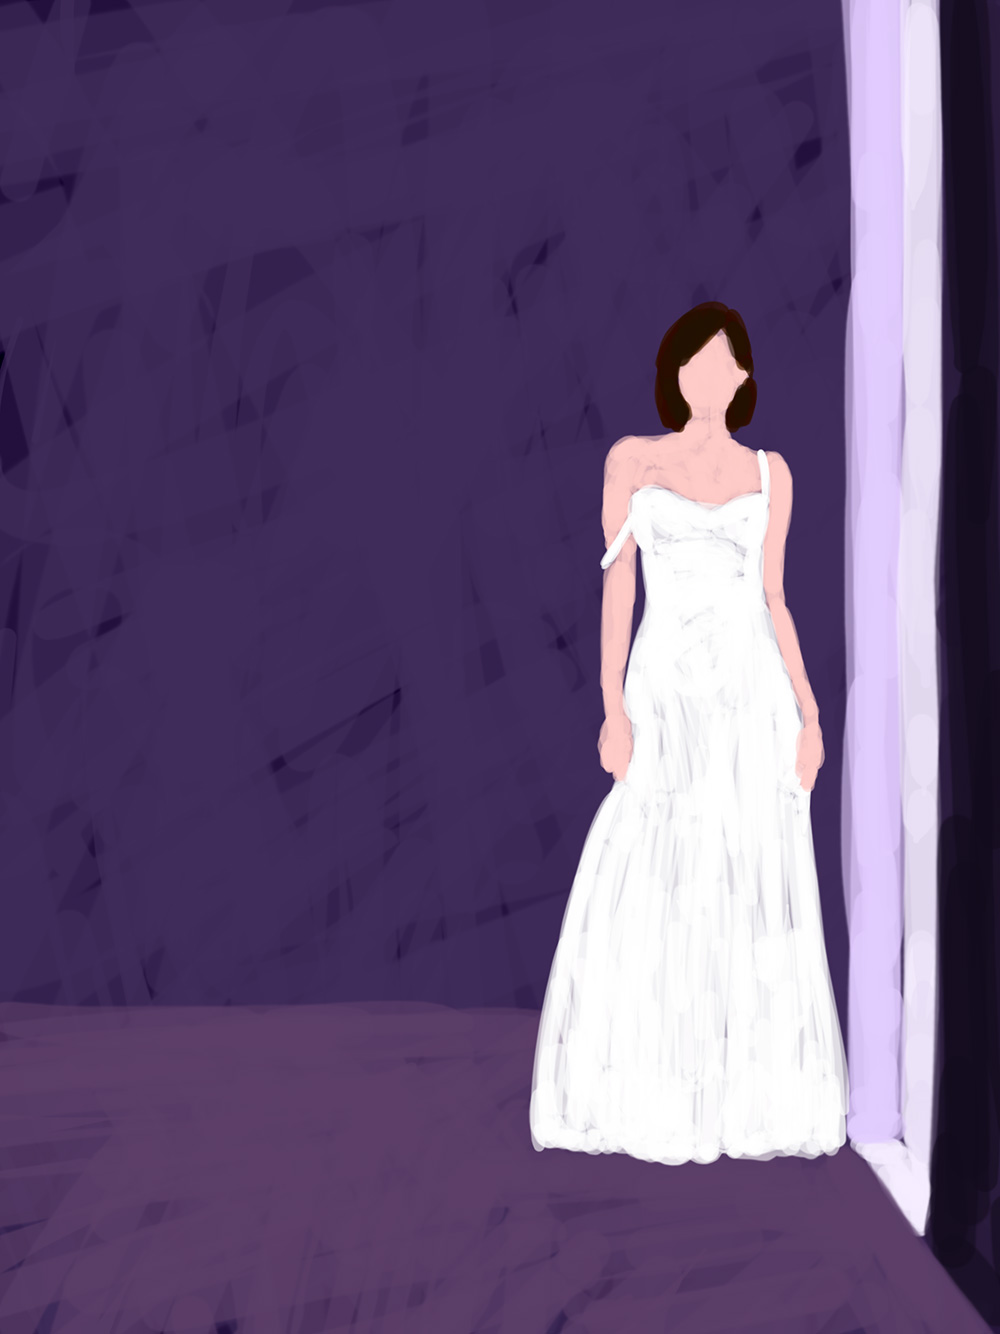 The Bride, iPad drawing by Guido Vrolix